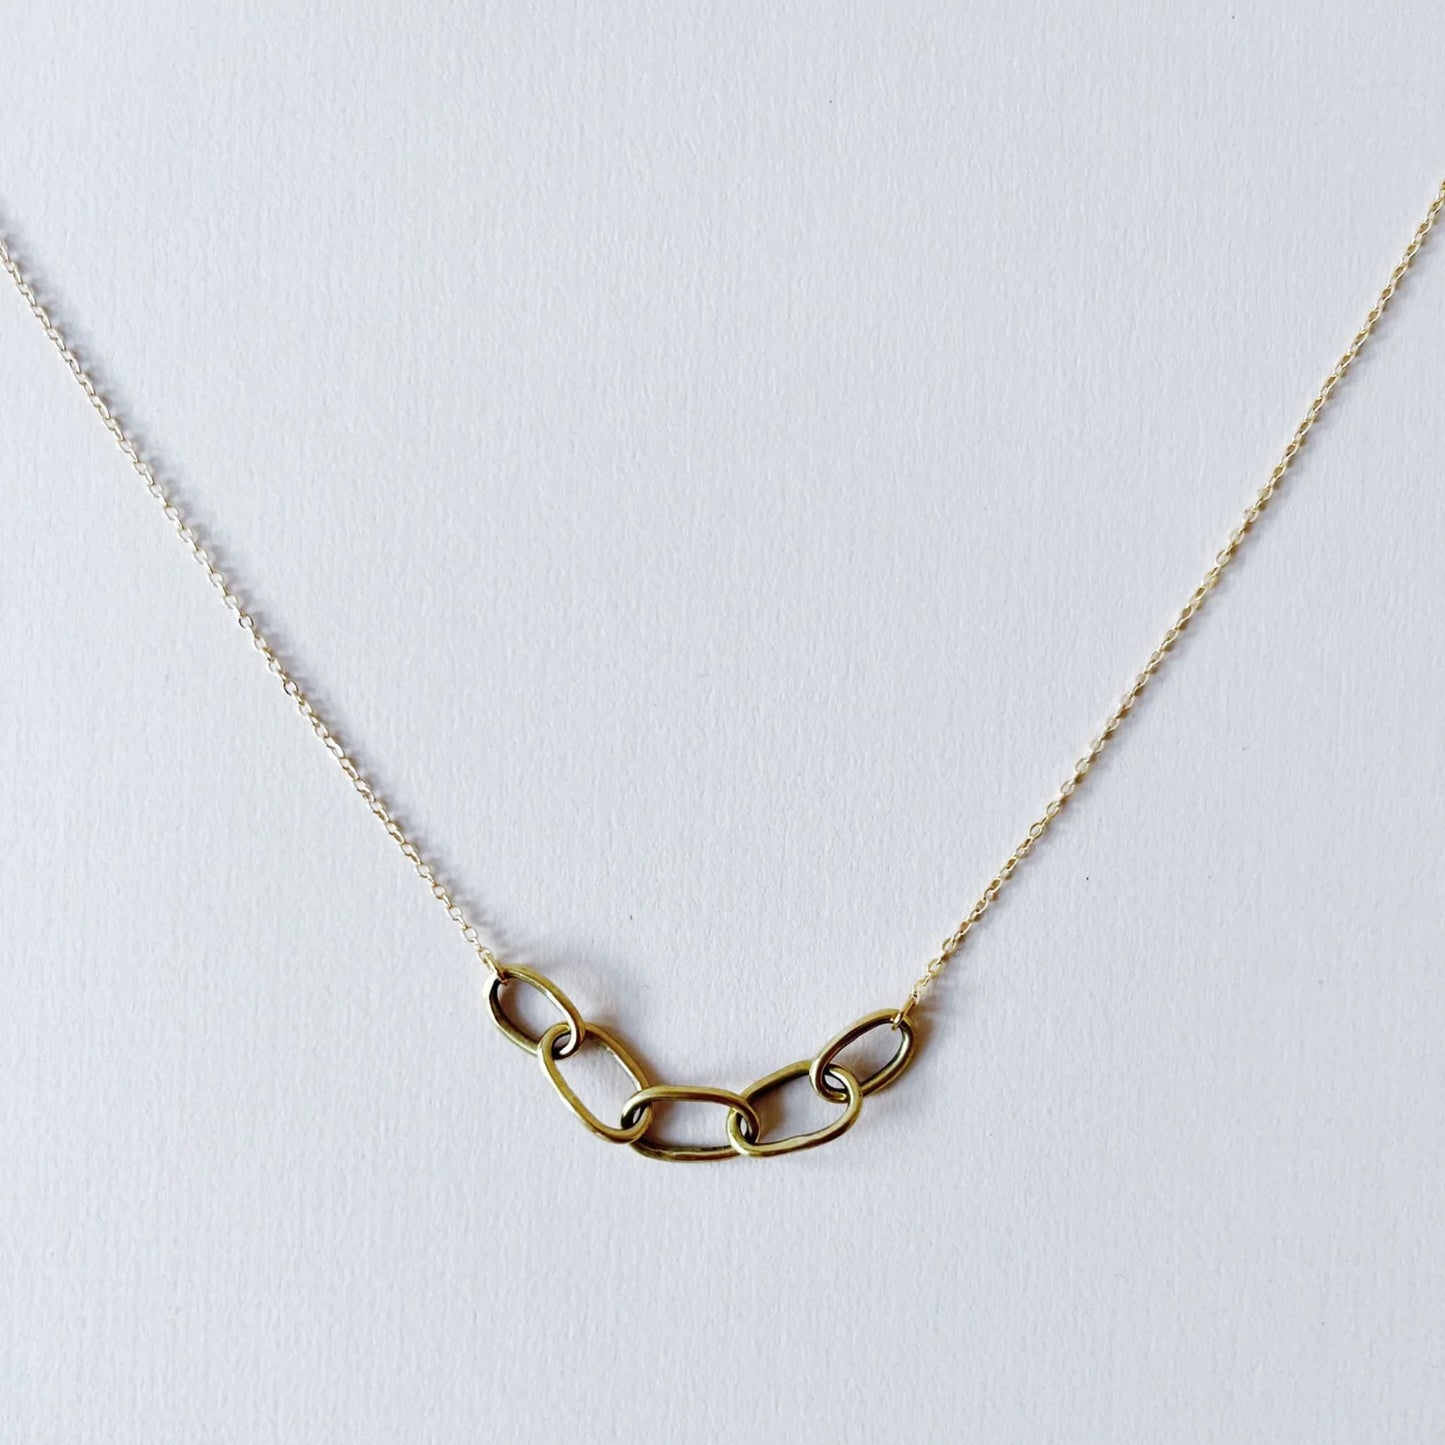 Infinite Necklace  Empowering Women in Uganda - brass chain necklace